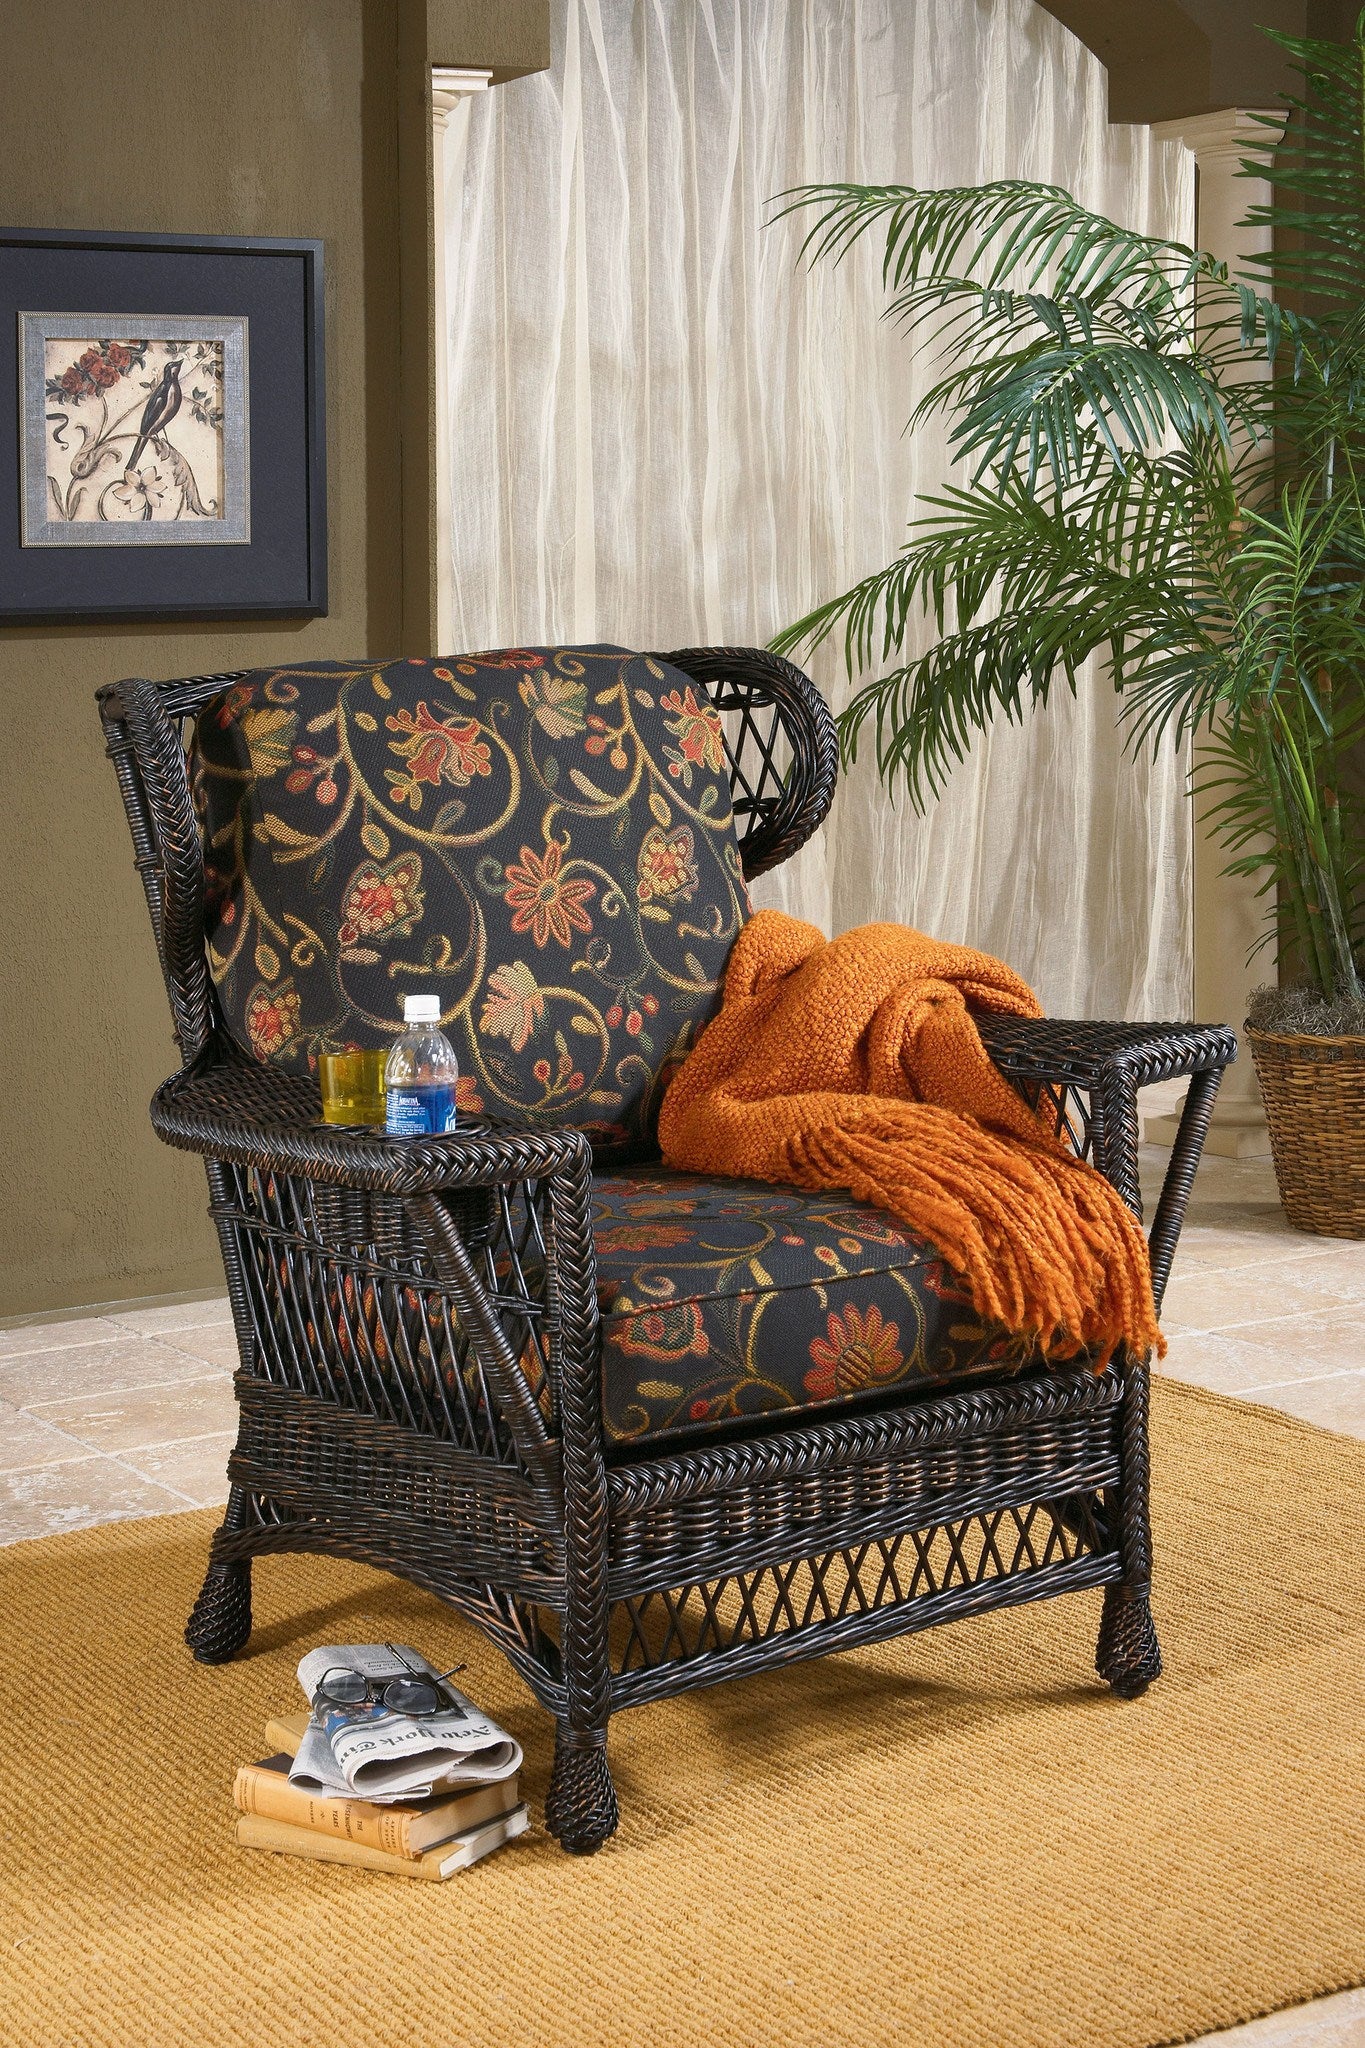 Designer Wicker & Rattan By Tribor Designer Wicker by Tribor Bar Harbor Wing Chair Chair - Rattan Imports